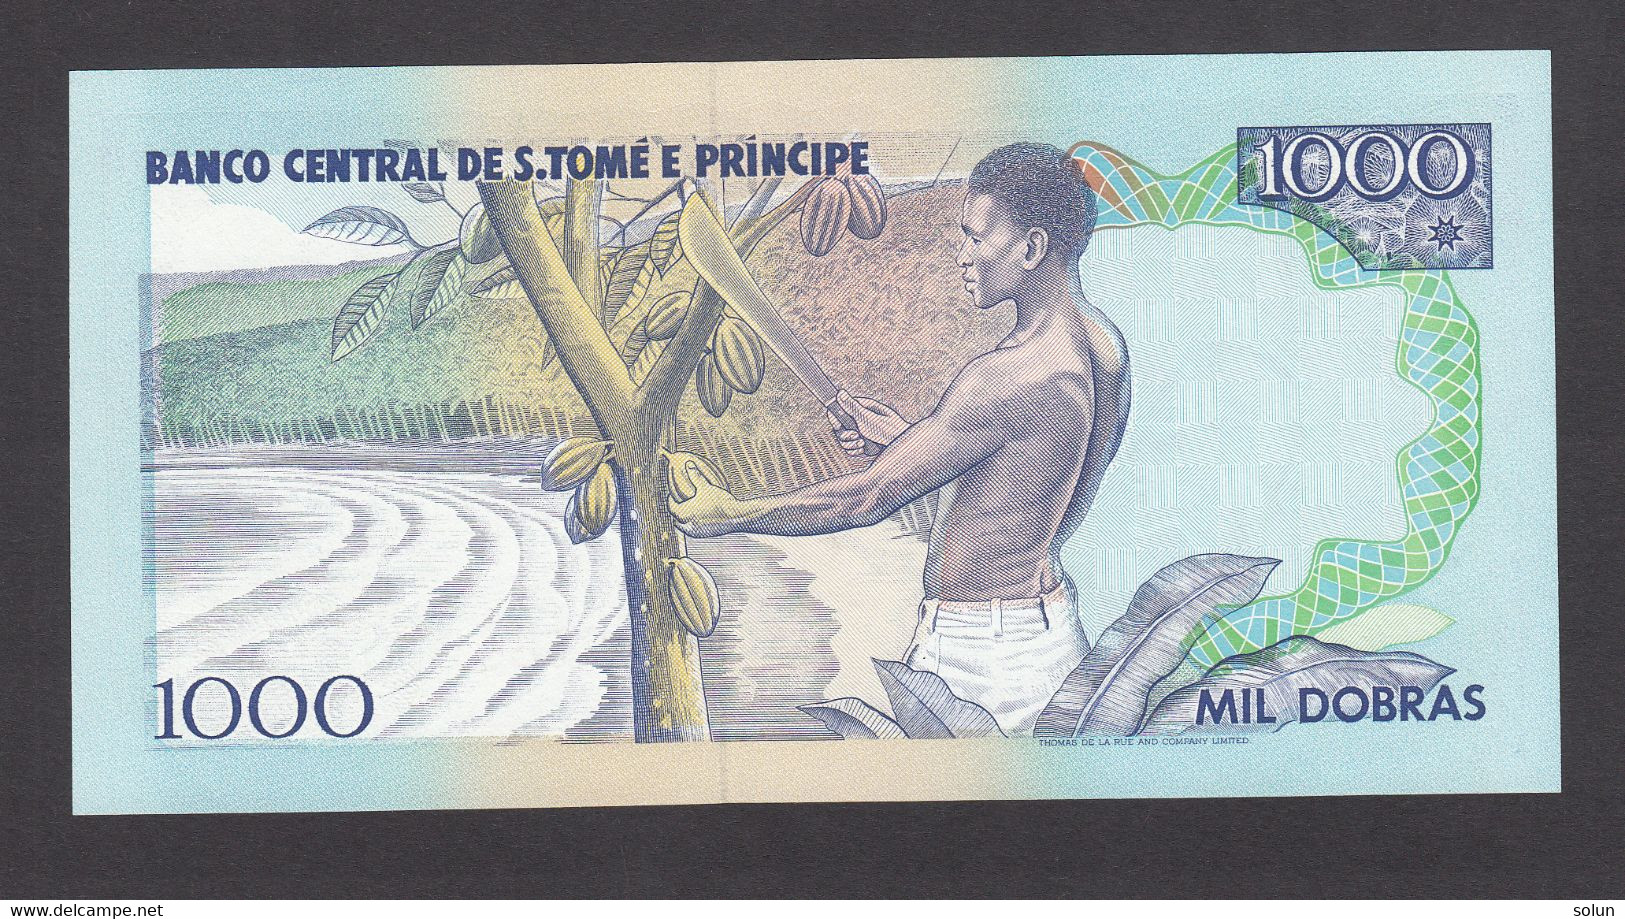 1000 MIL DOBRAS 1993 BANCO CENTRAL DE S.TOME E PRINCIPE BANKNOTE SAO TOME E PRINCIPE - San Tomé Y Príncipe